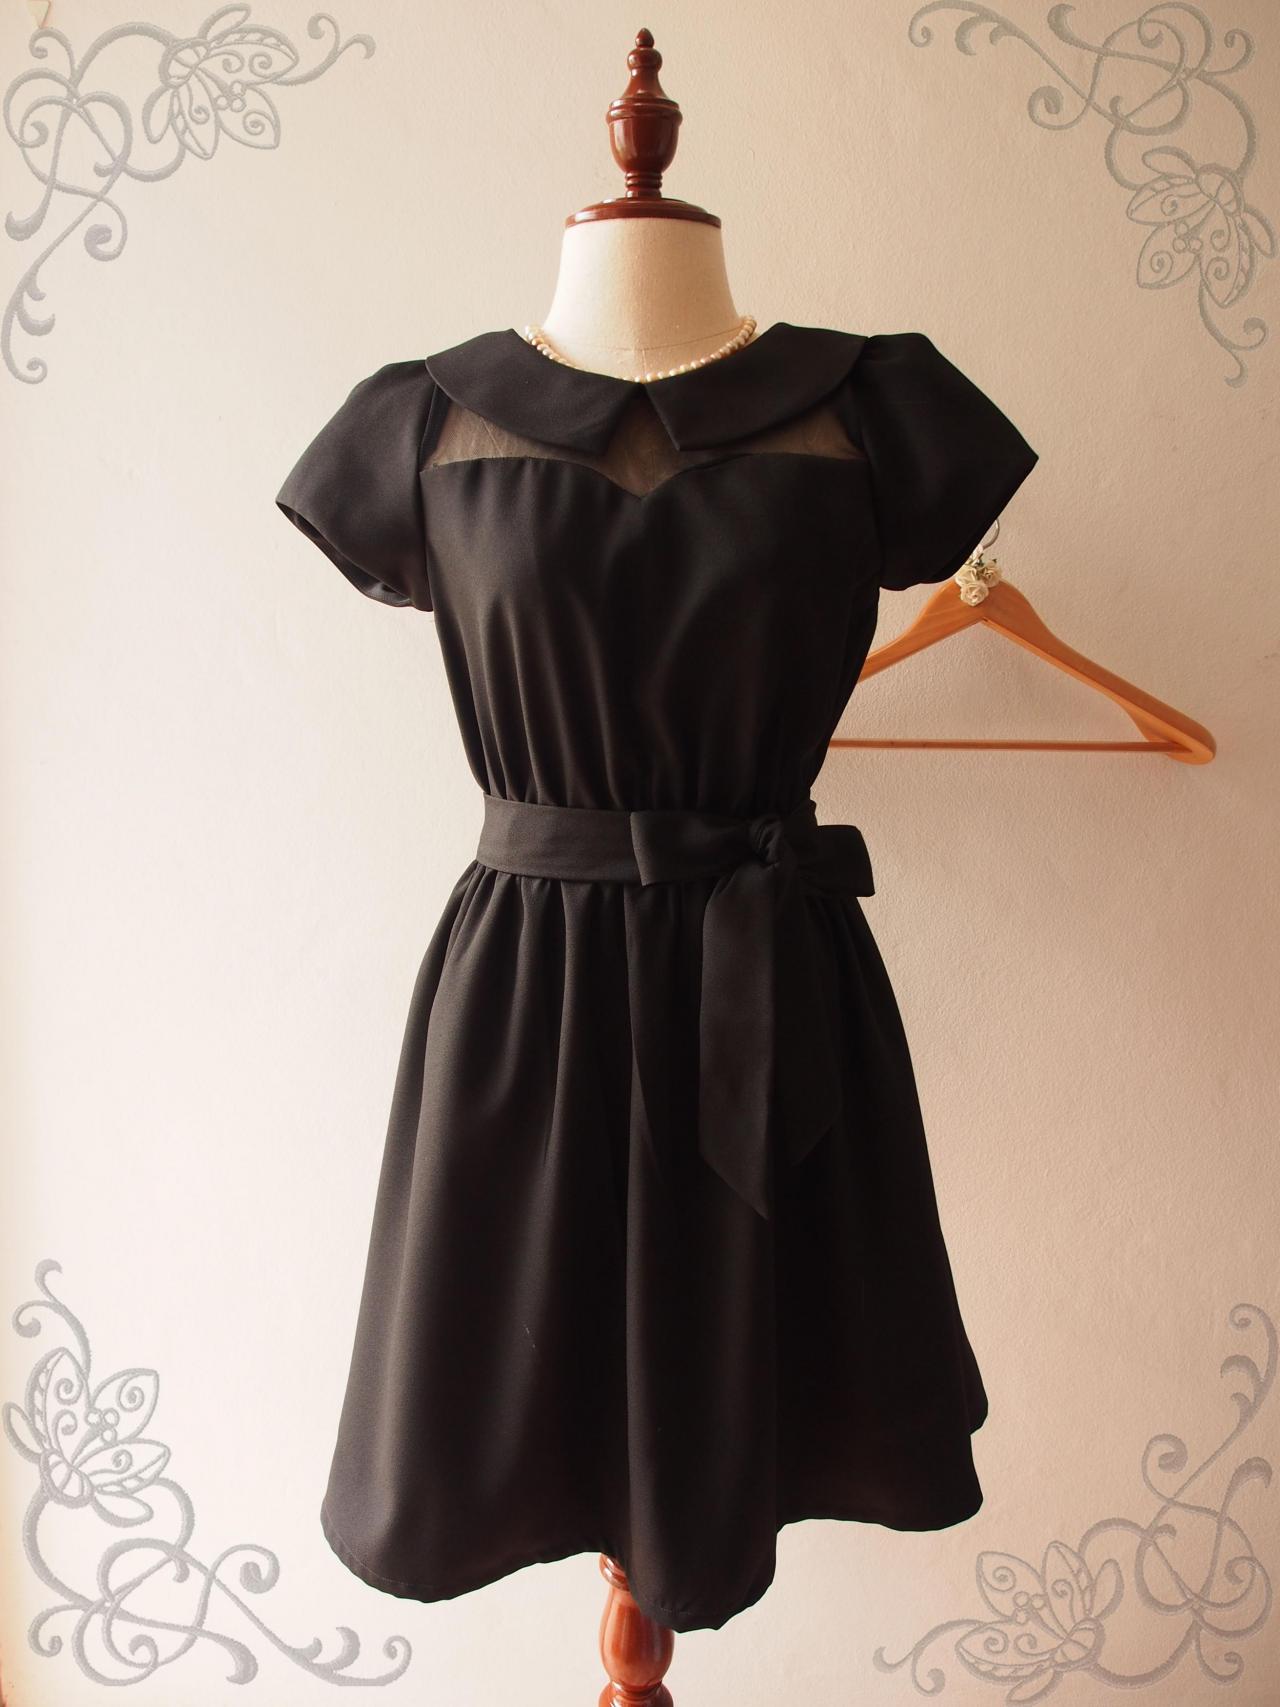 Black Collar Dress Peter pan Collar Dress Cute Vintage Inspired Party Dress XS-XL